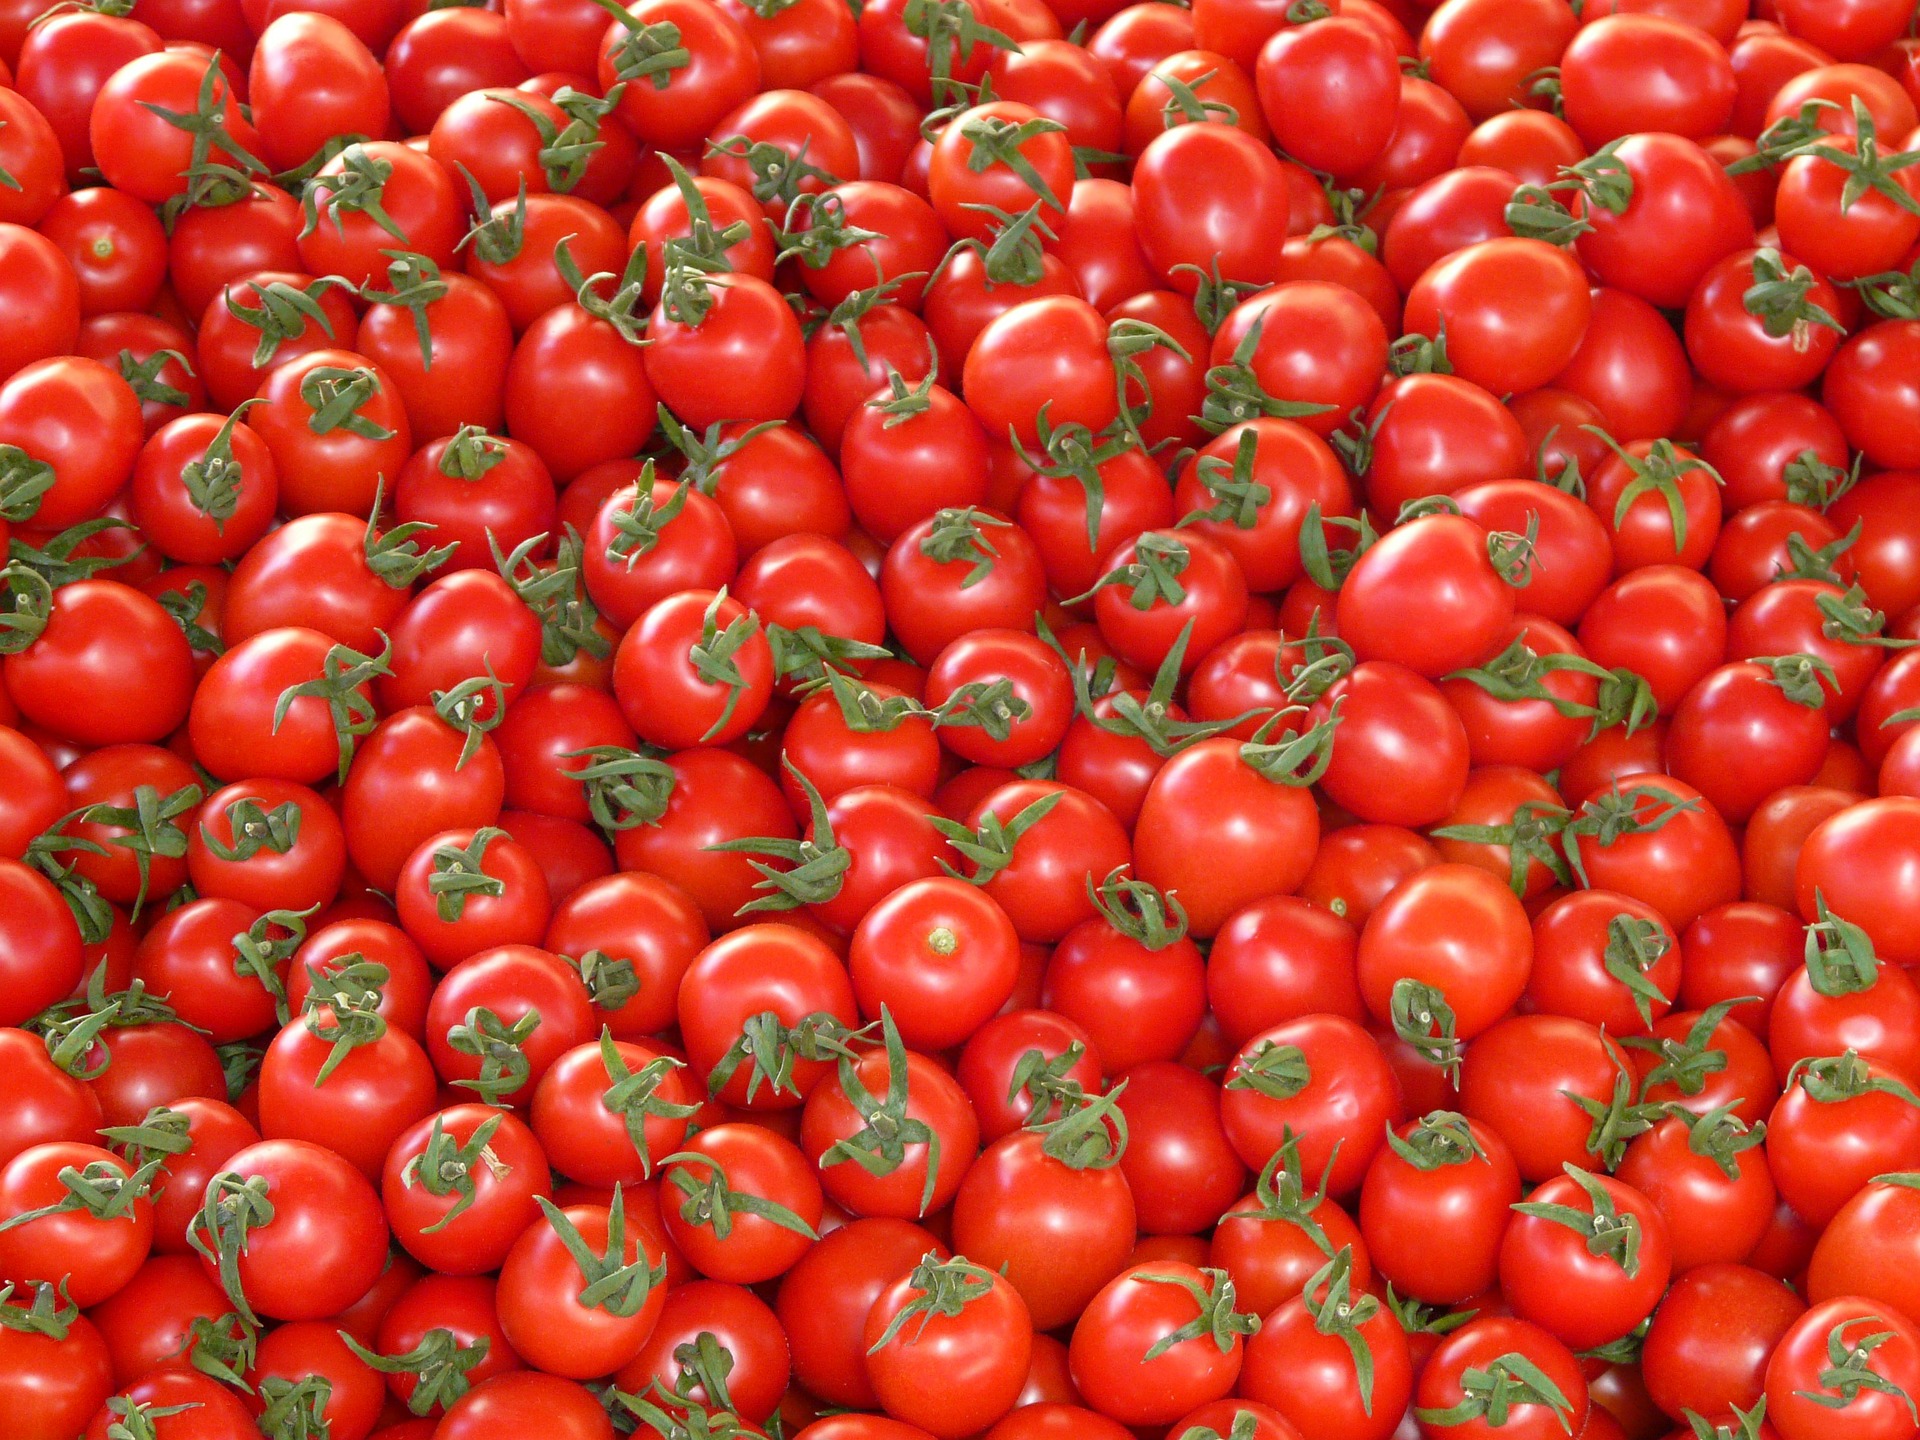 Kurdistan region prohibits importing tomato